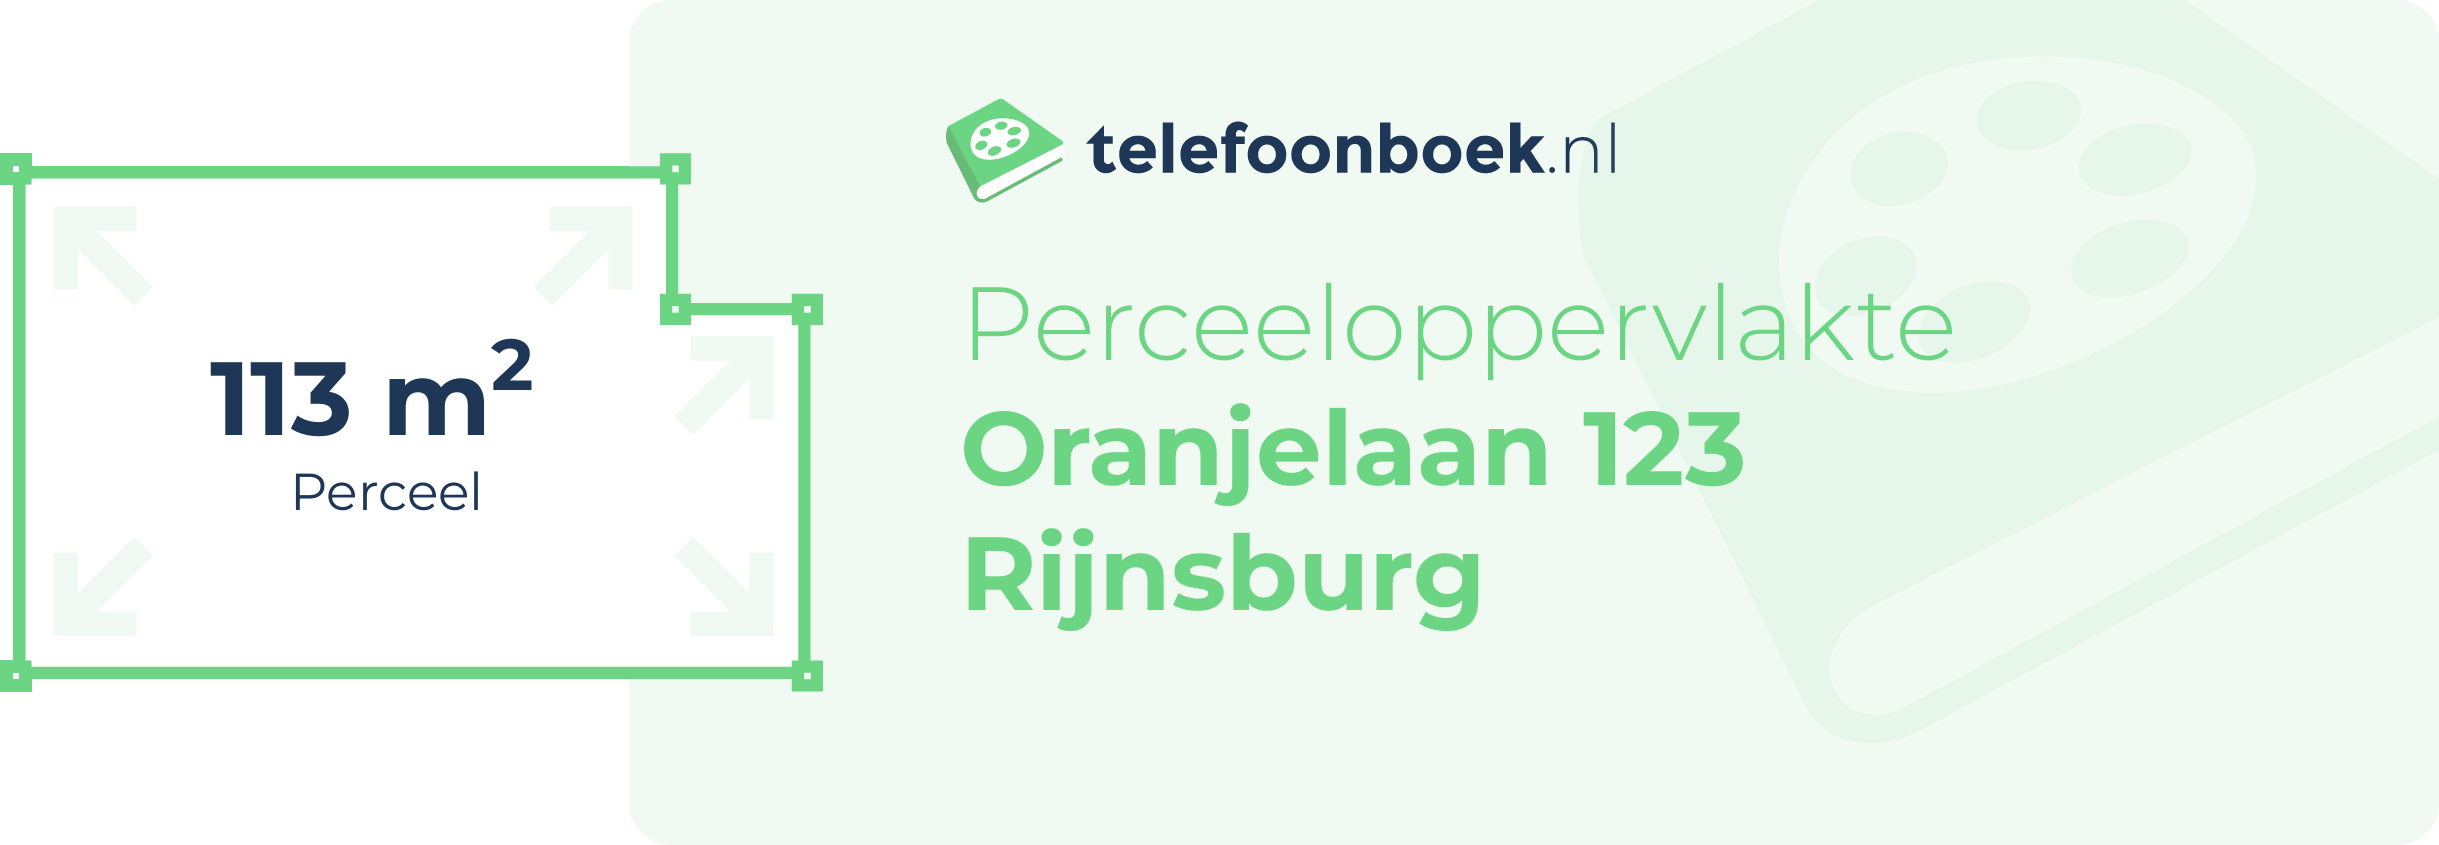 Perceeloppervlakte Oranjelaan 123 Rijnsburg